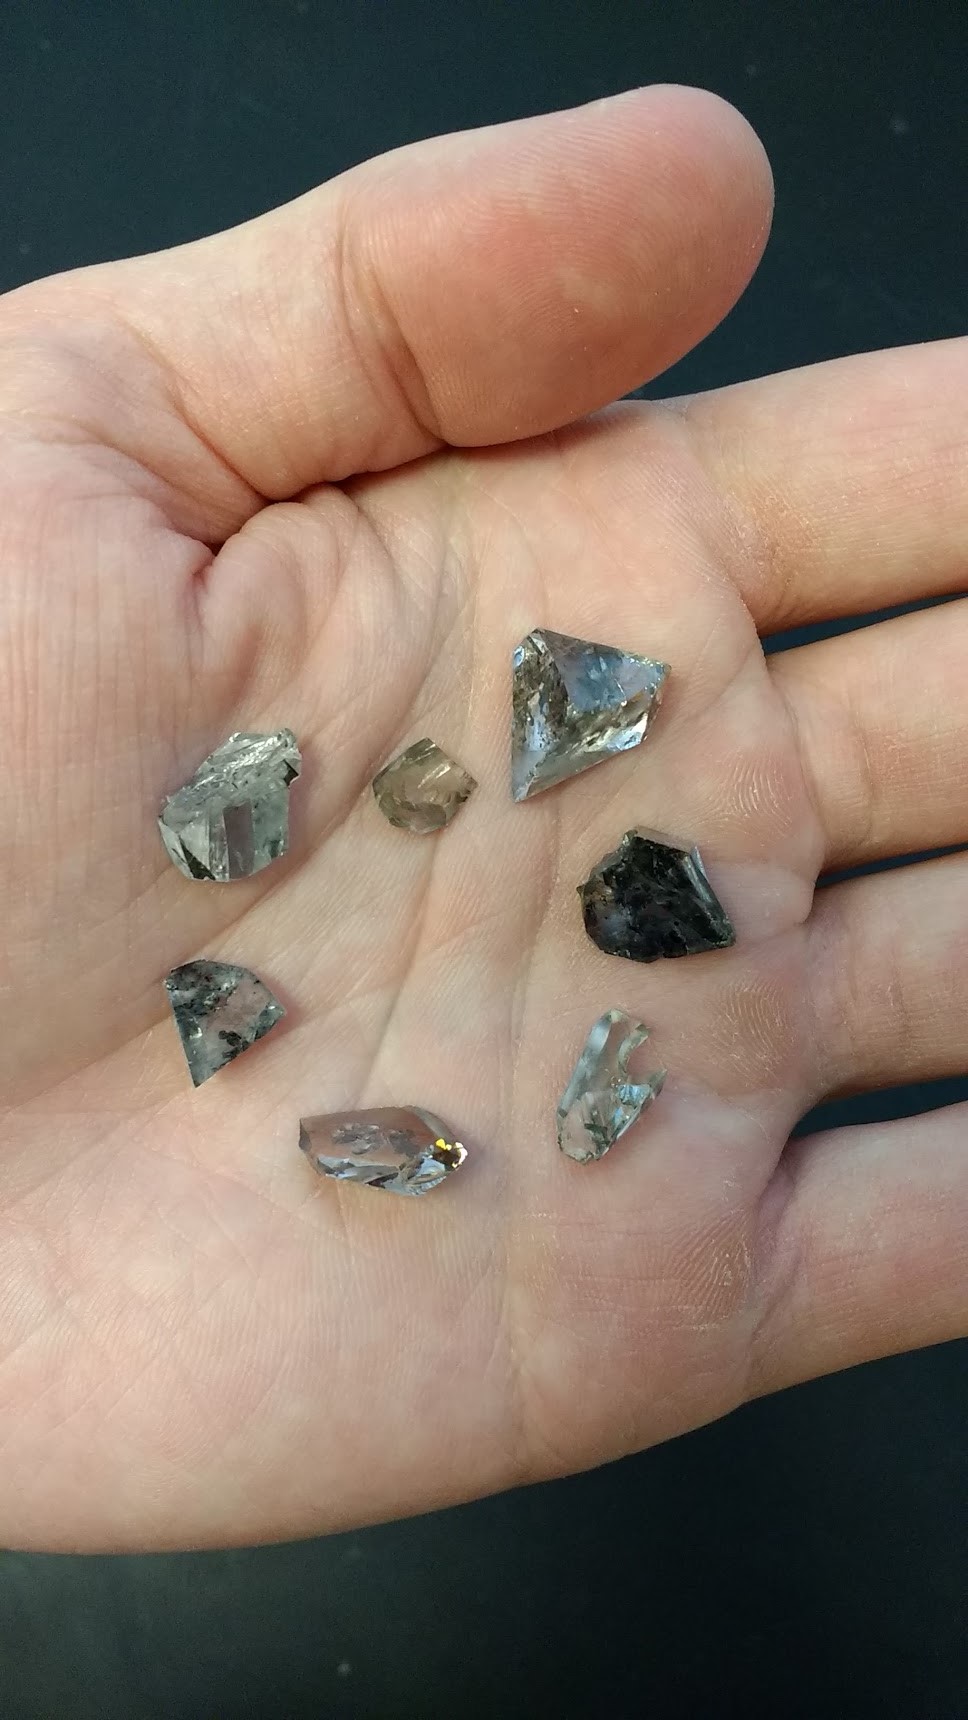 Diamond Impurities Reveal Water Deep Within the Mantle - Eos